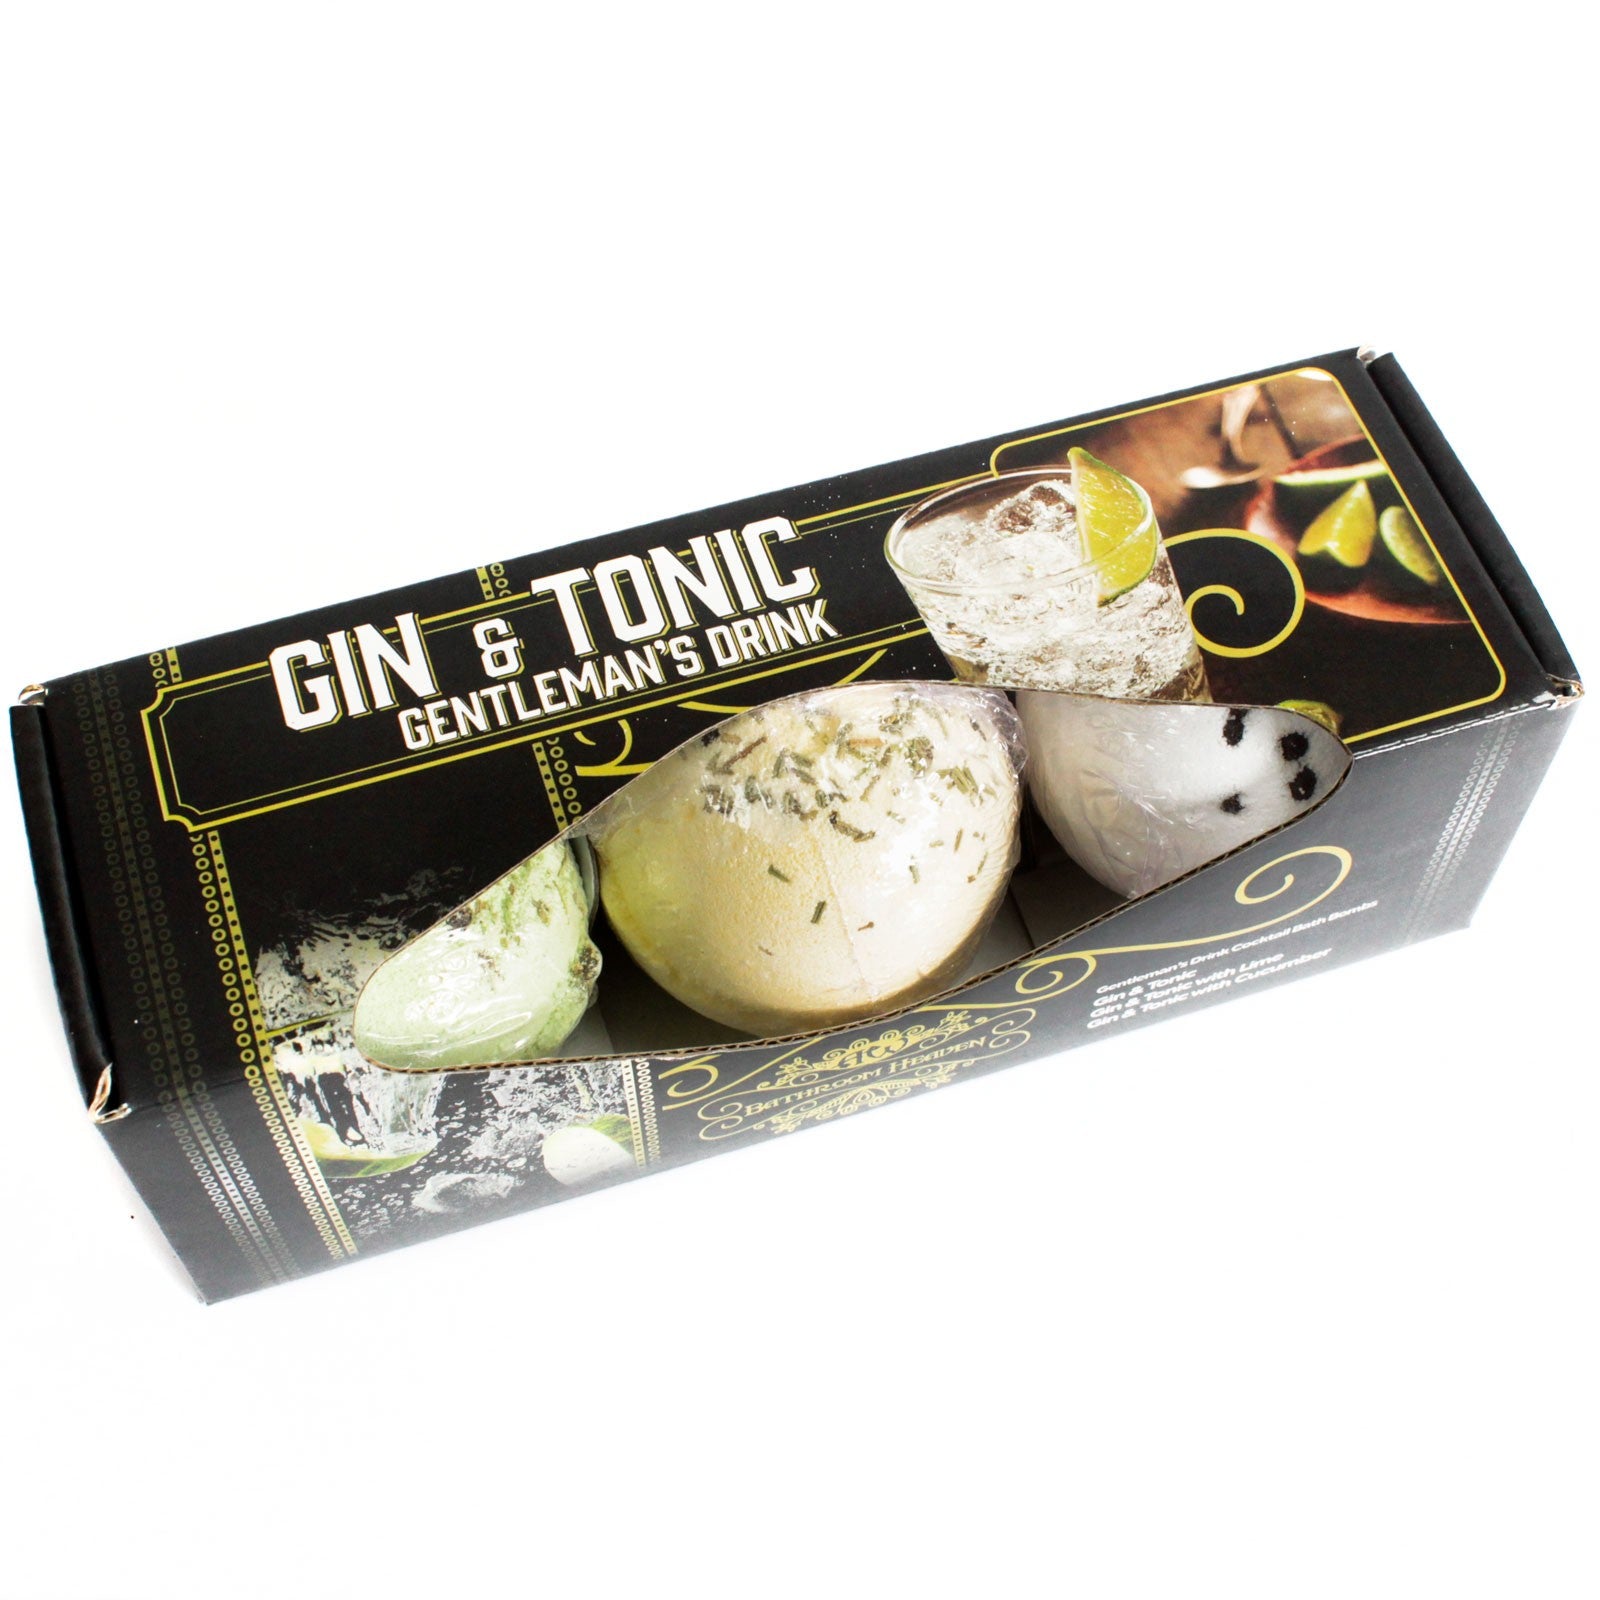 View Set of Three Gin Tonic Bath Bombs information